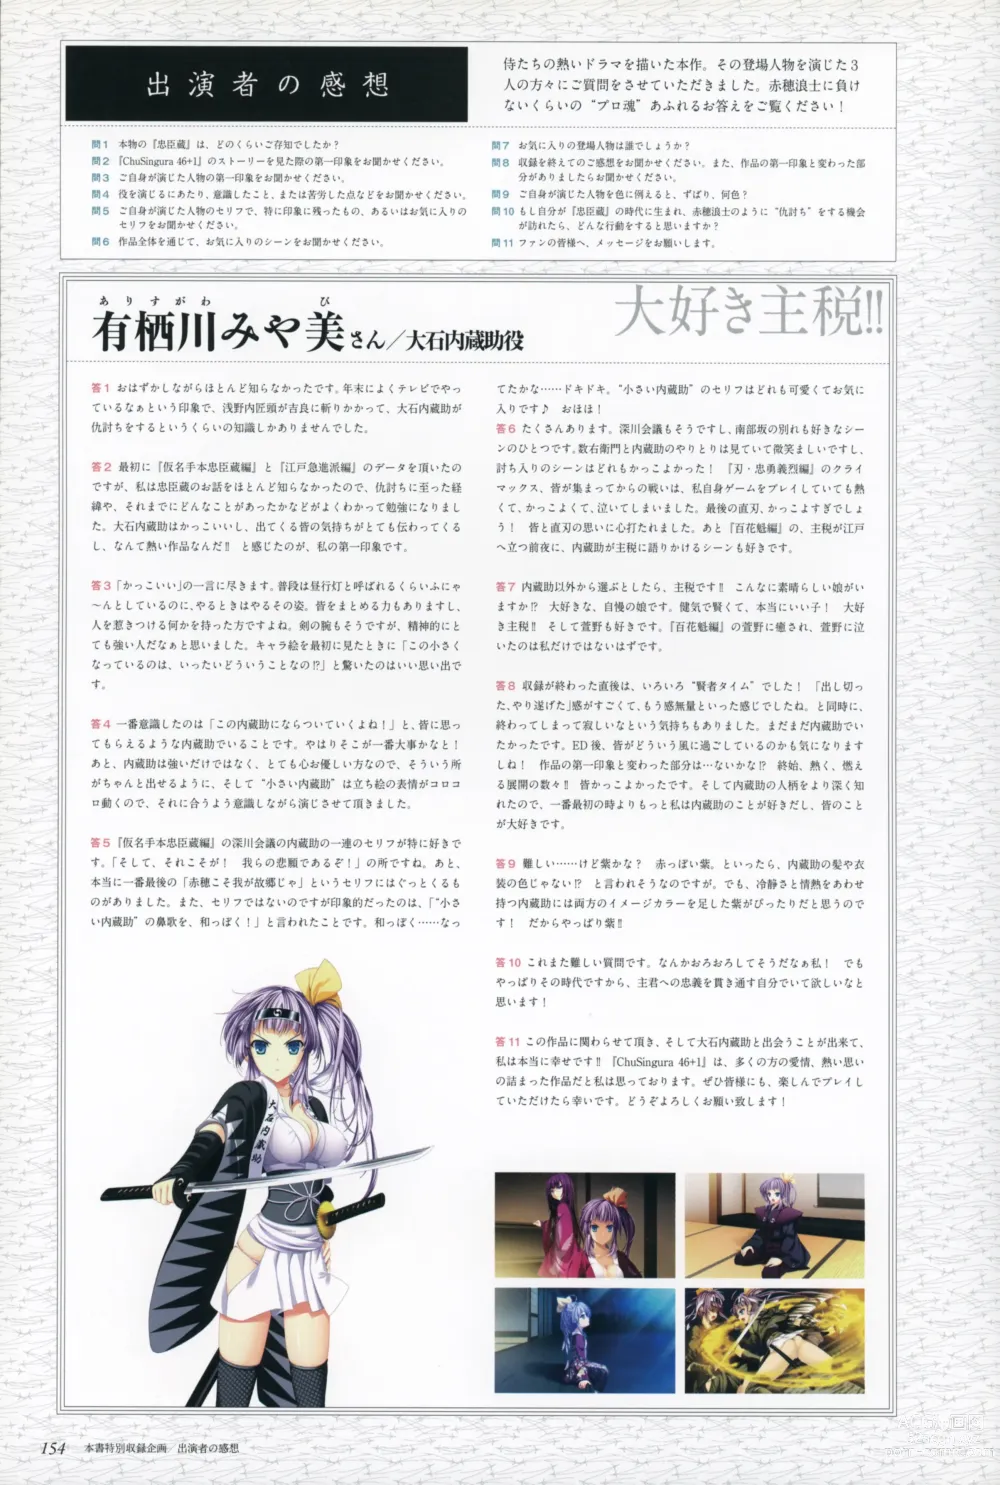 Page 156 of manga ChuSinGura 46+1 Official Visual Fan Book